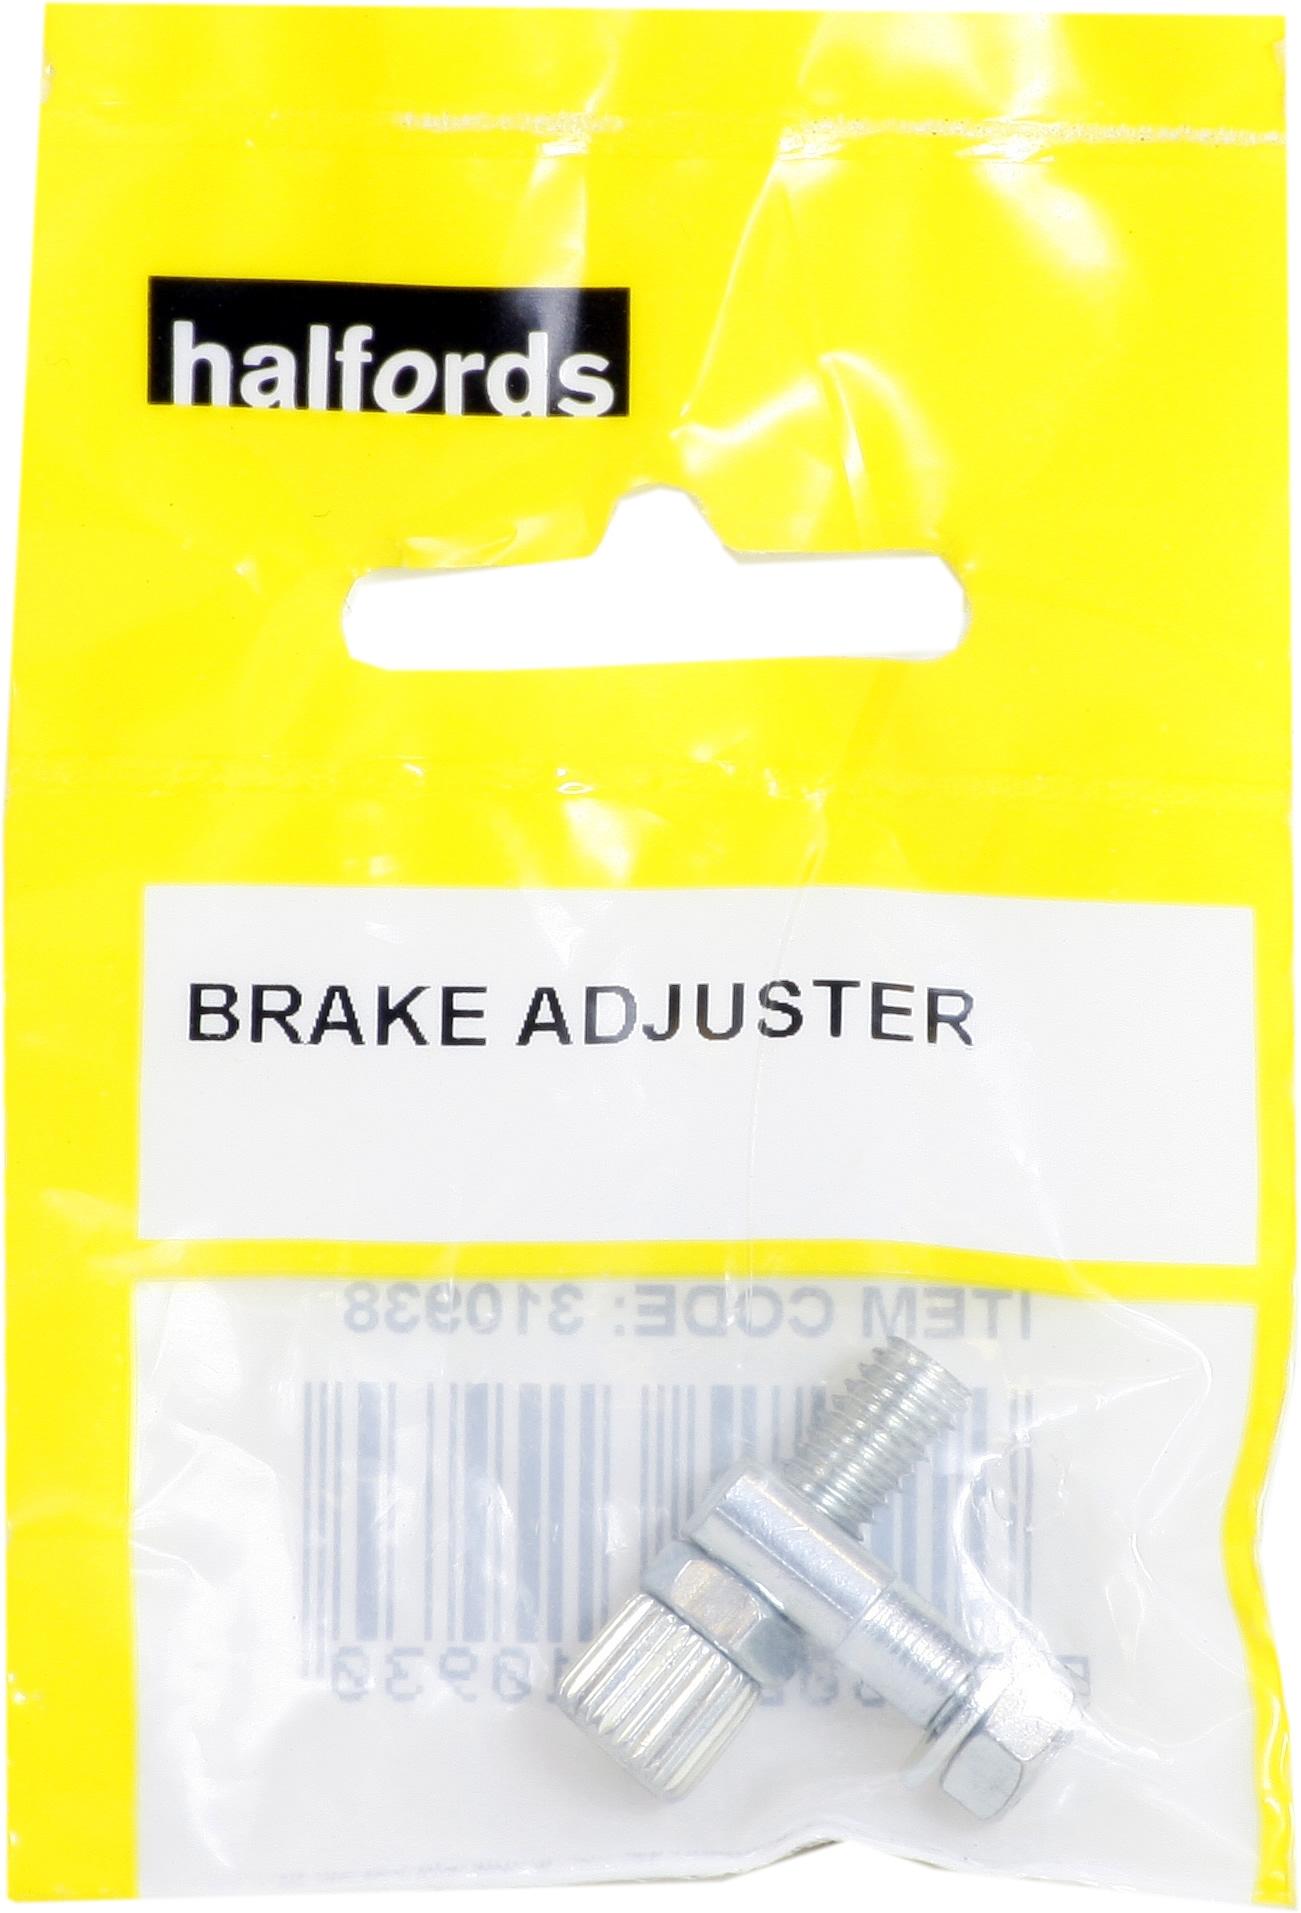 halfords brake cable